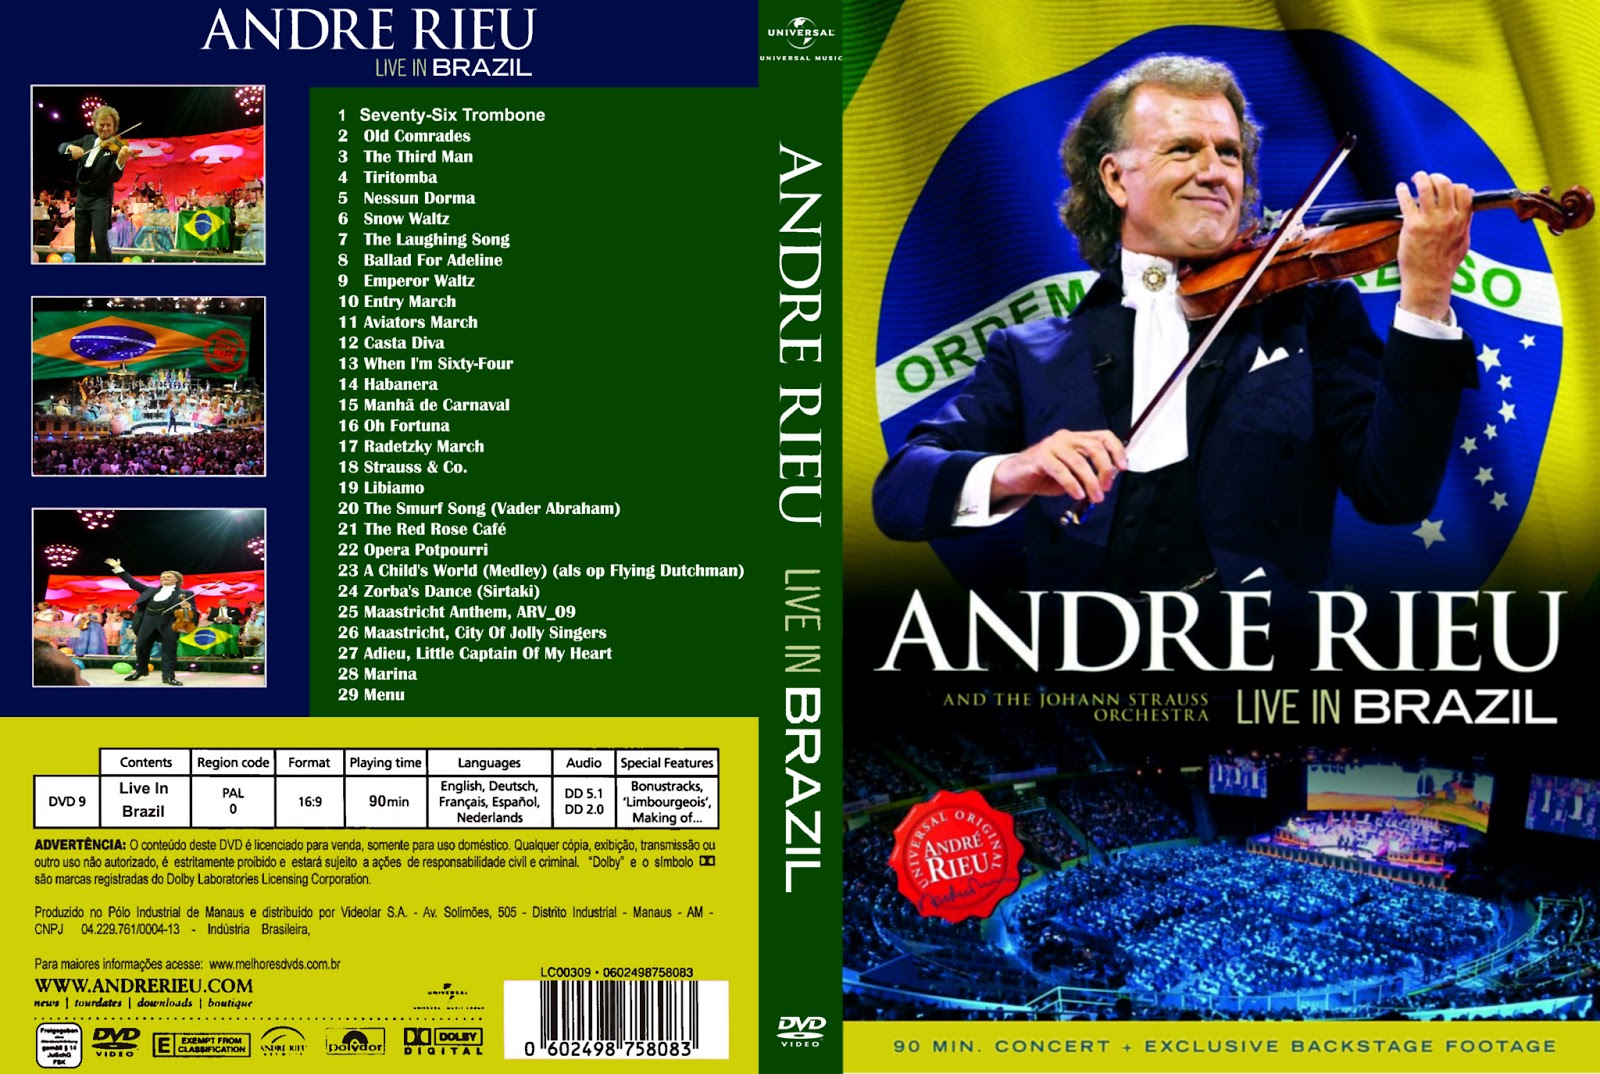 Andr%C3%A9+Rieu+-+Live+In+Brazil+-+Capa+Show+DVD.jpg